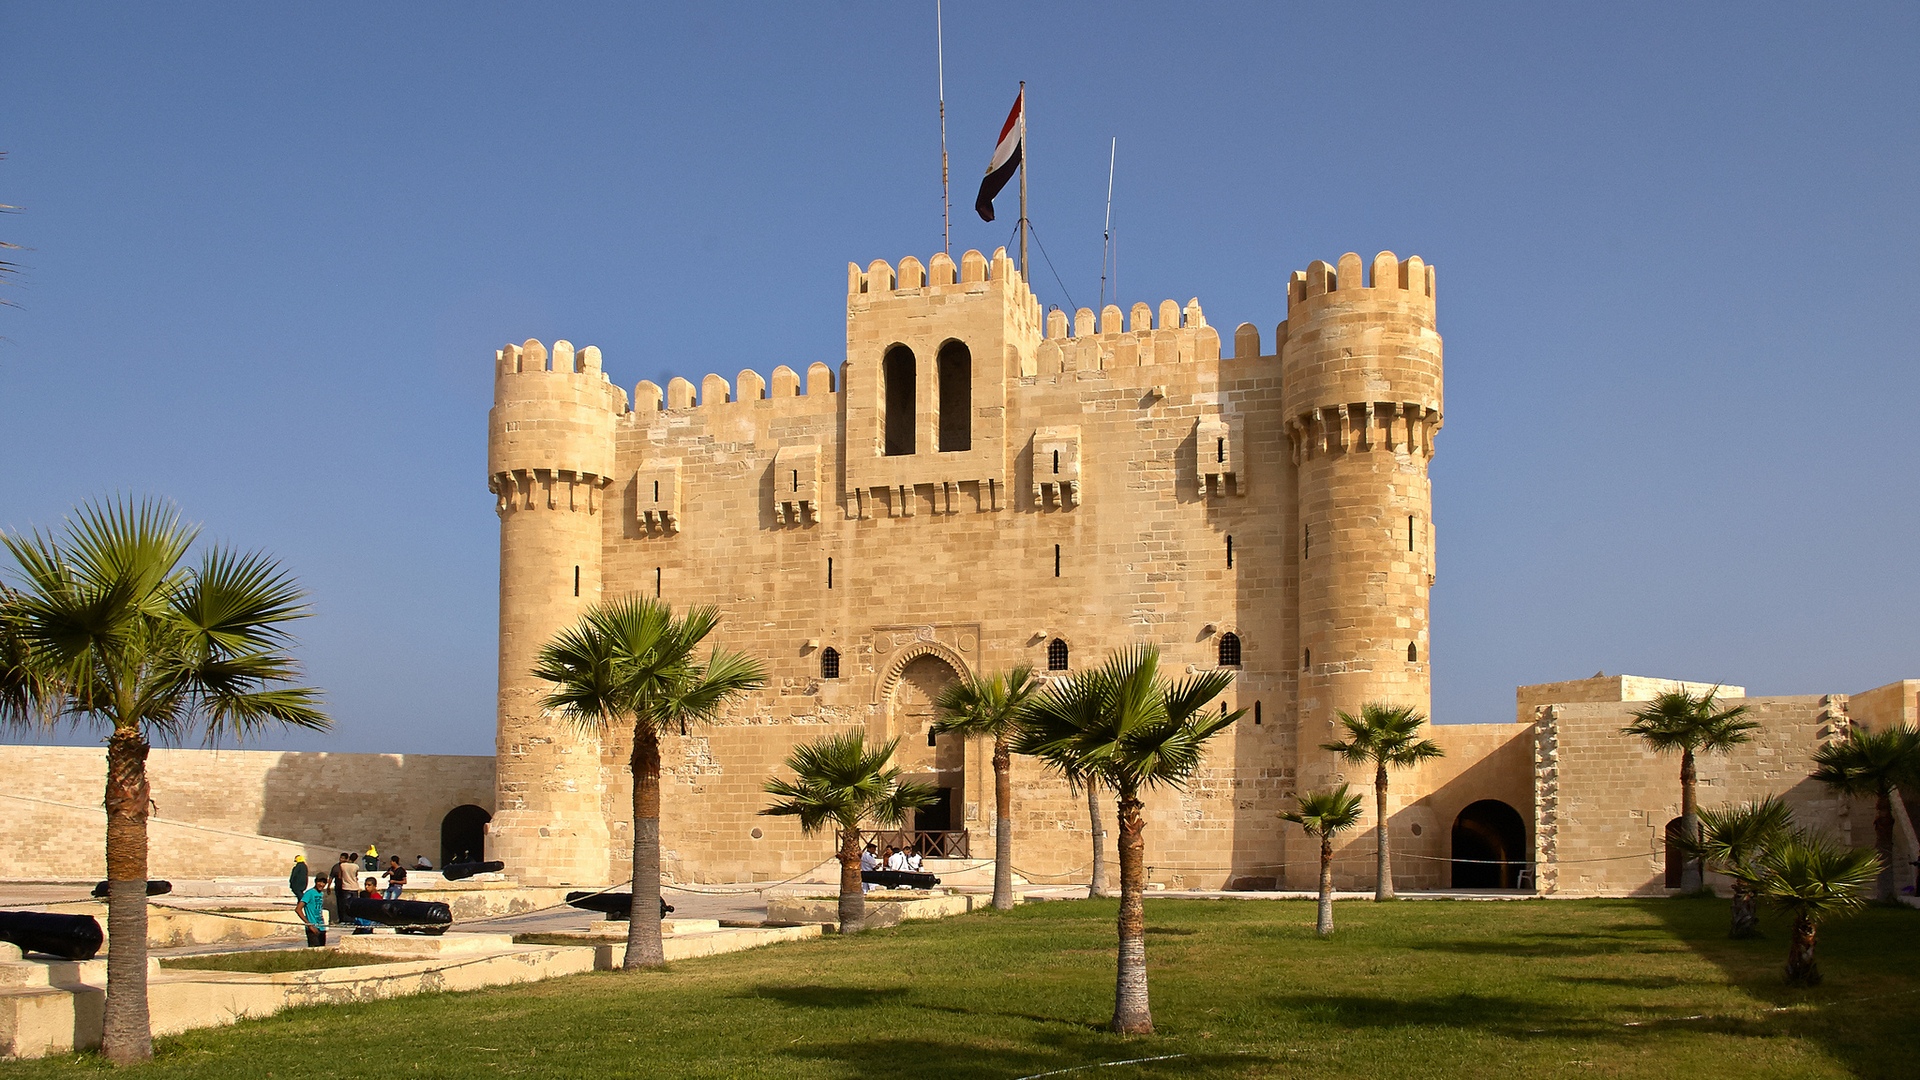 Qaitbay Citadel Information, Qaitbay Citadel Architecture